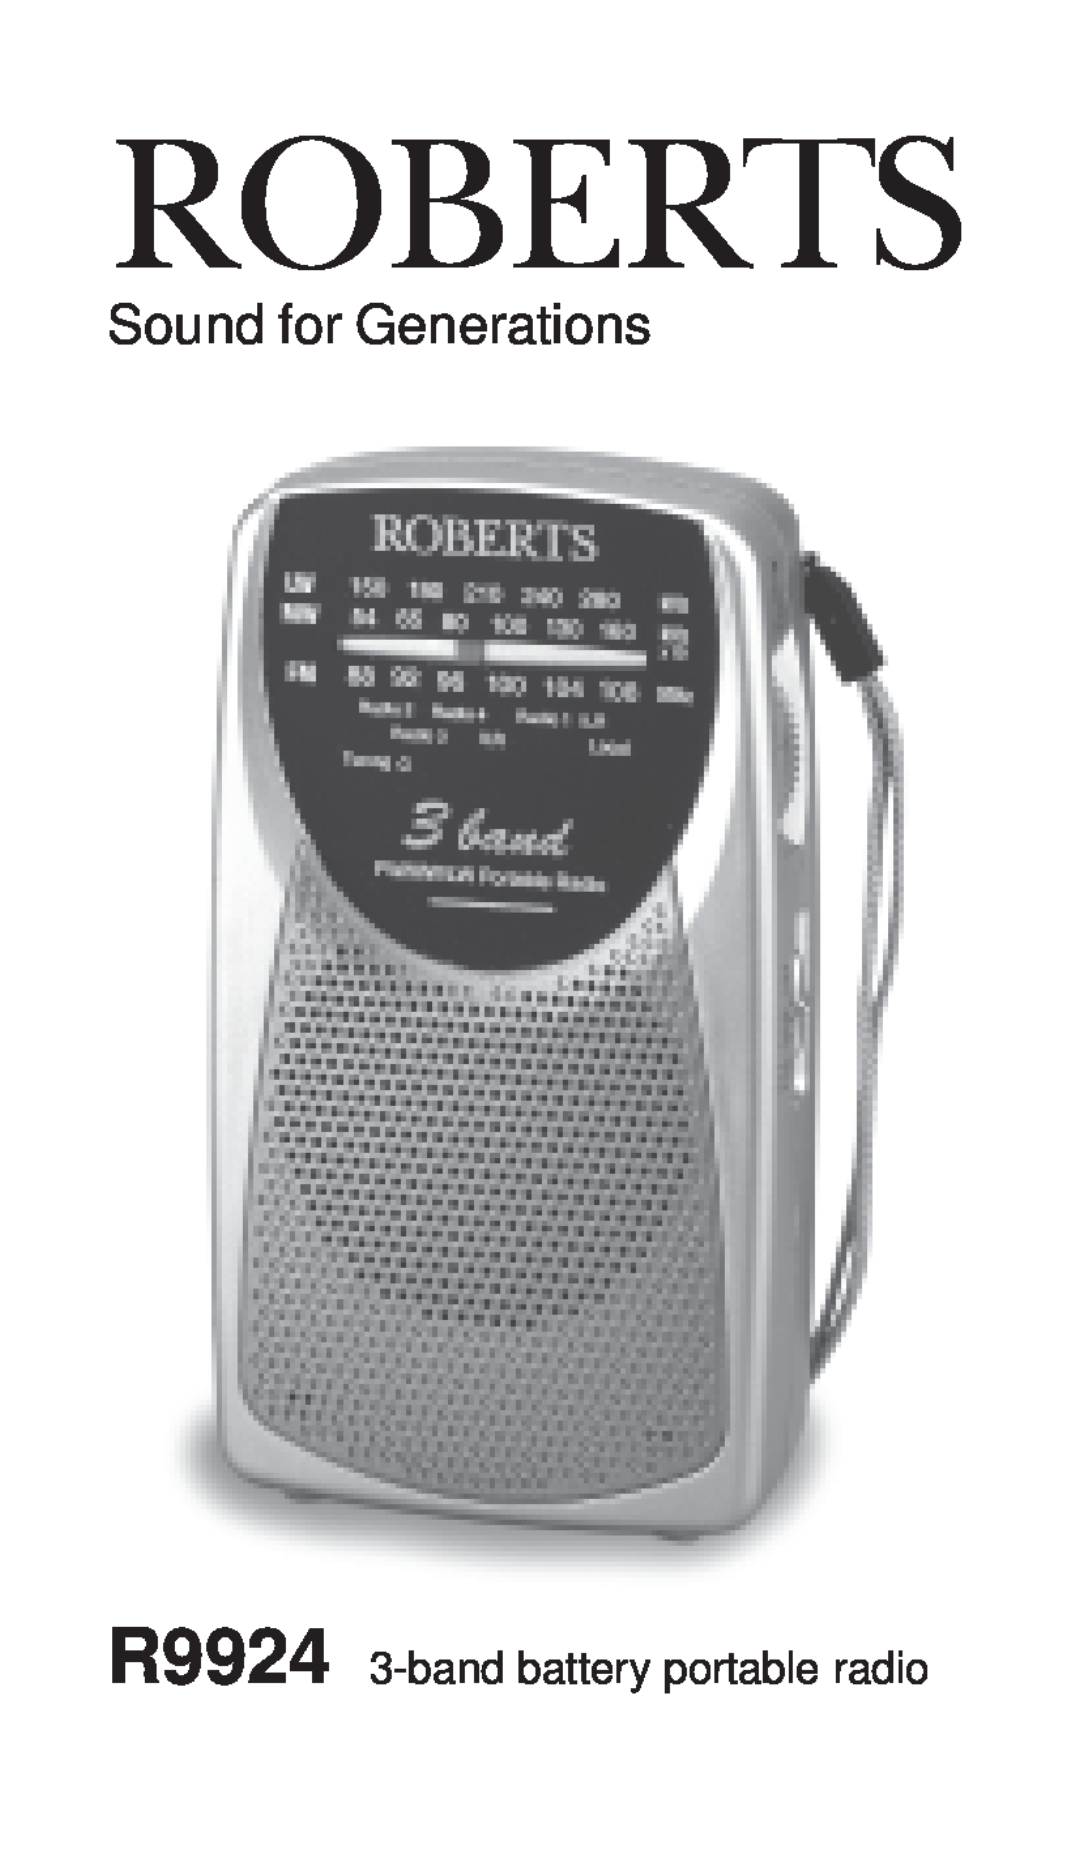 Roberts Radio R9924 manual Roberts, Sound for Generations 